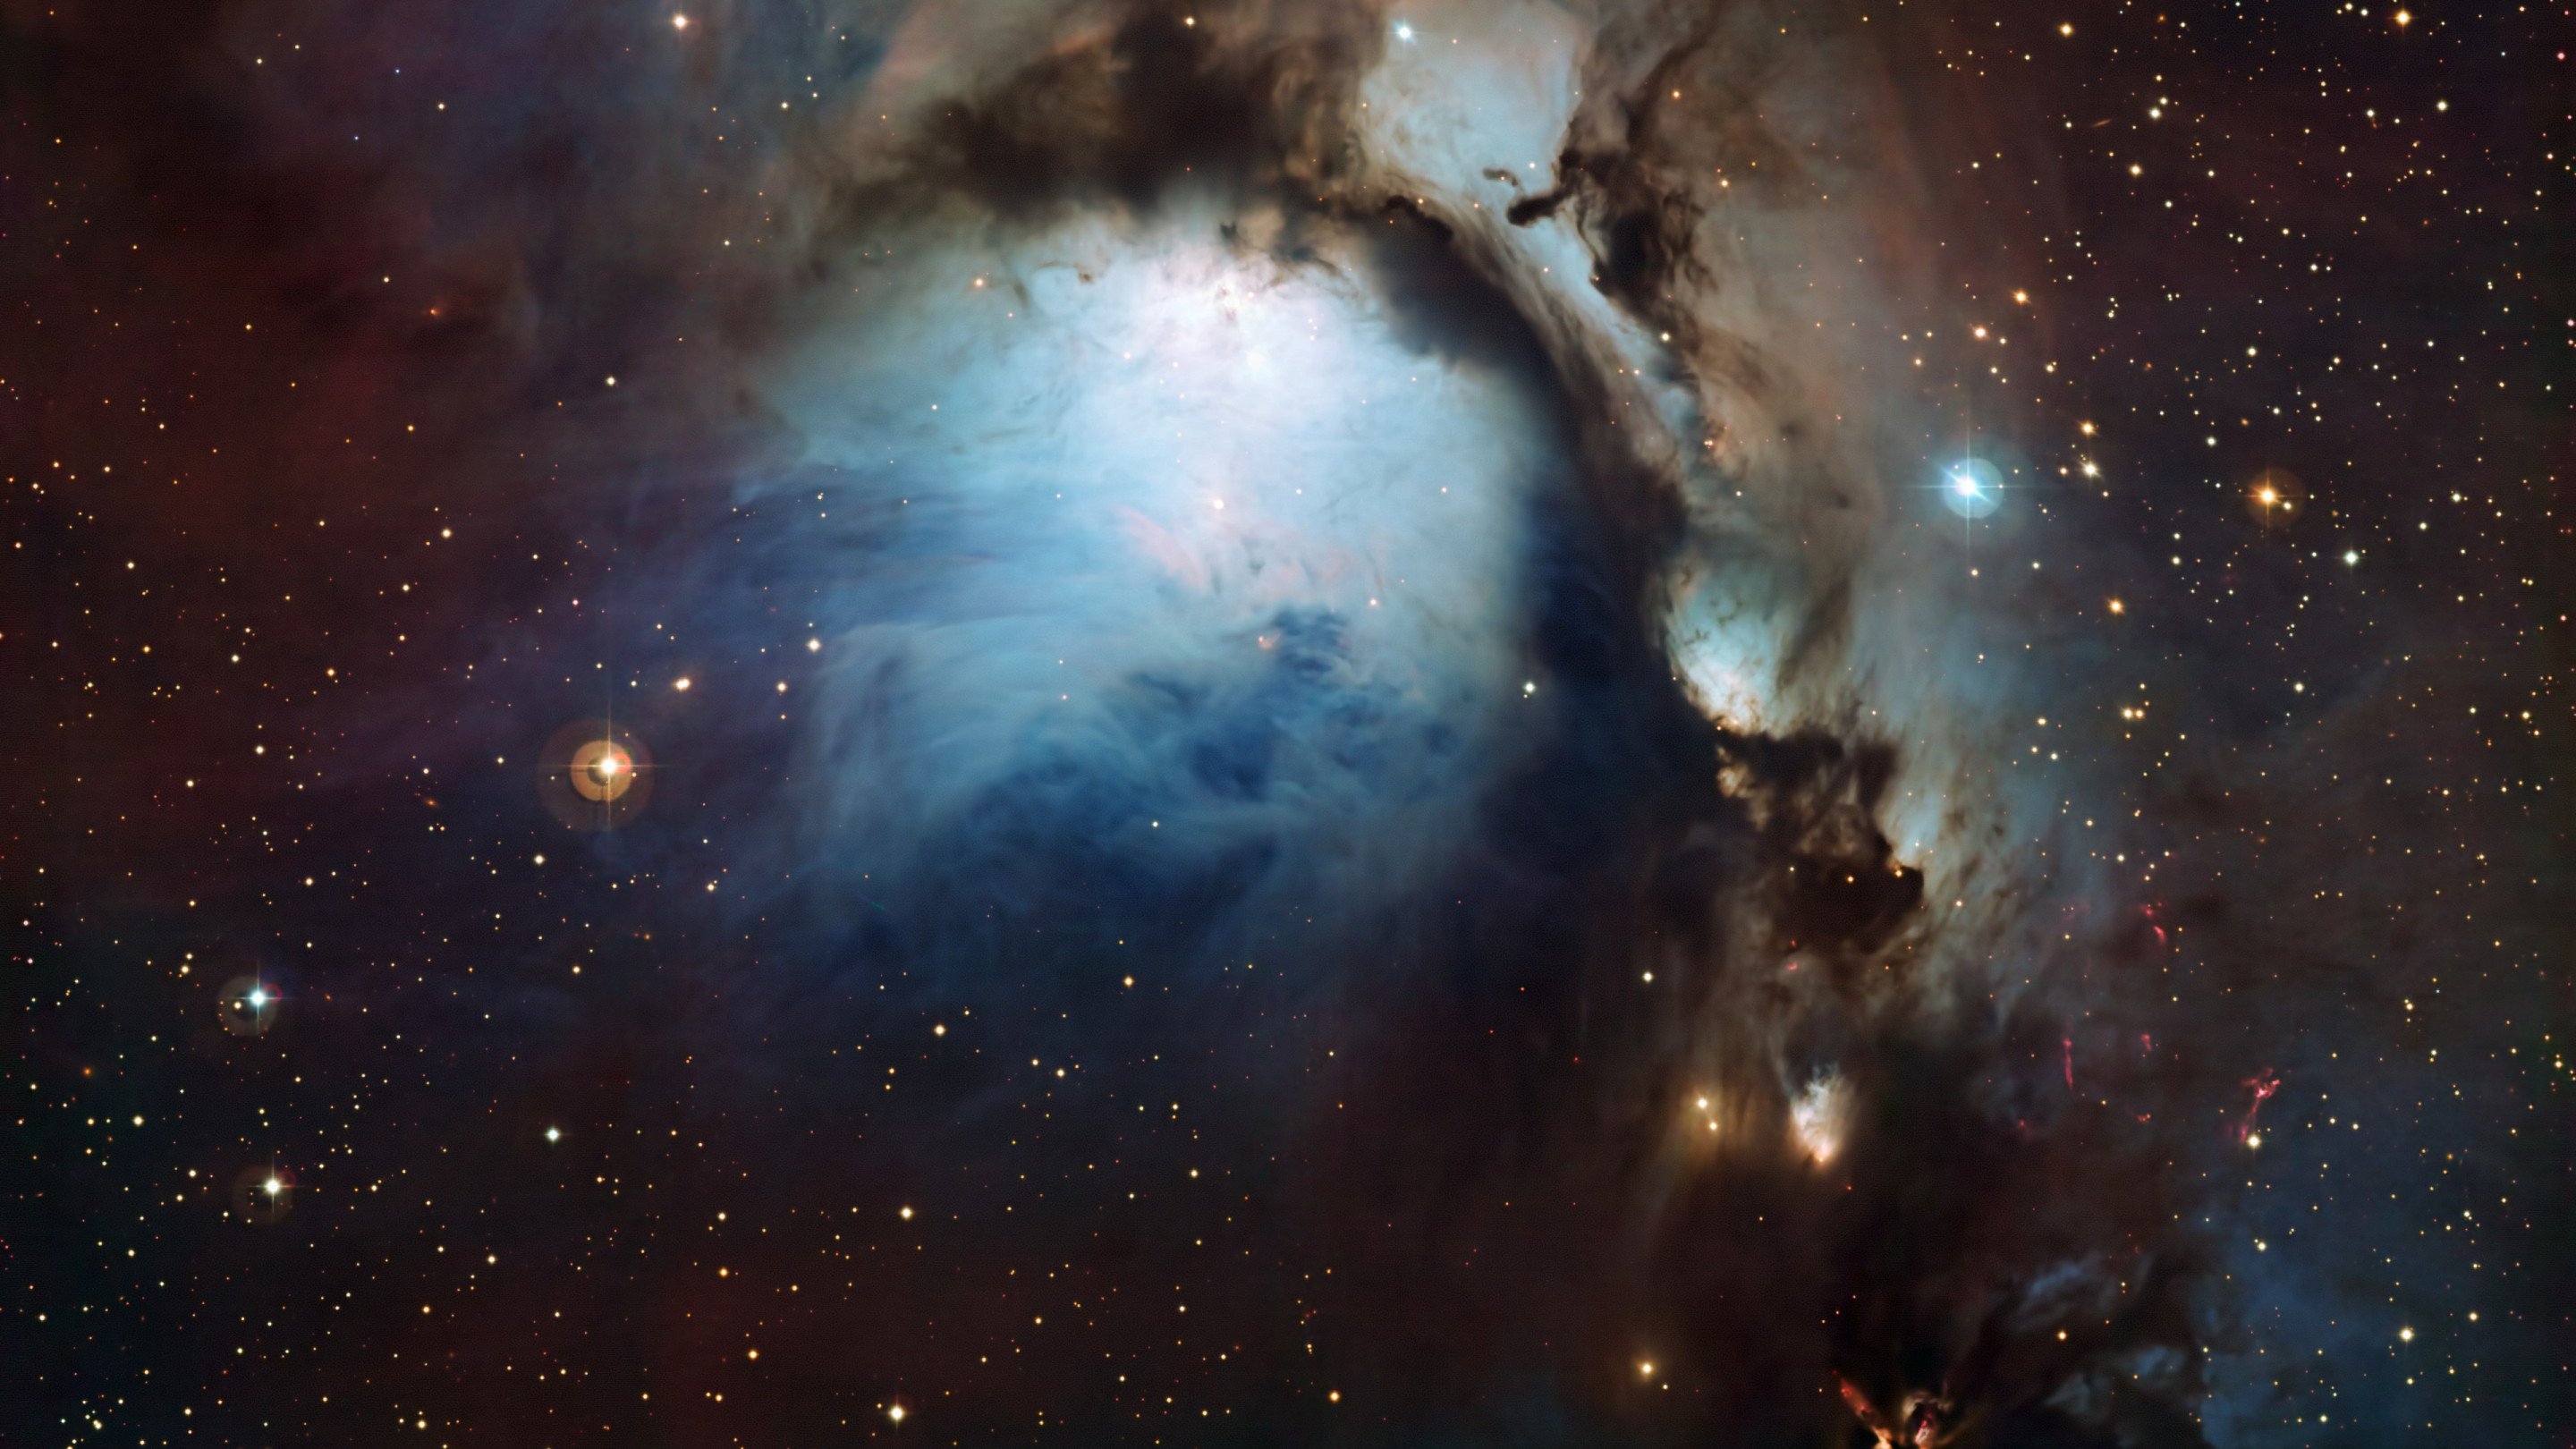 Reflection nebula in Orion wallpaper 2880x1620